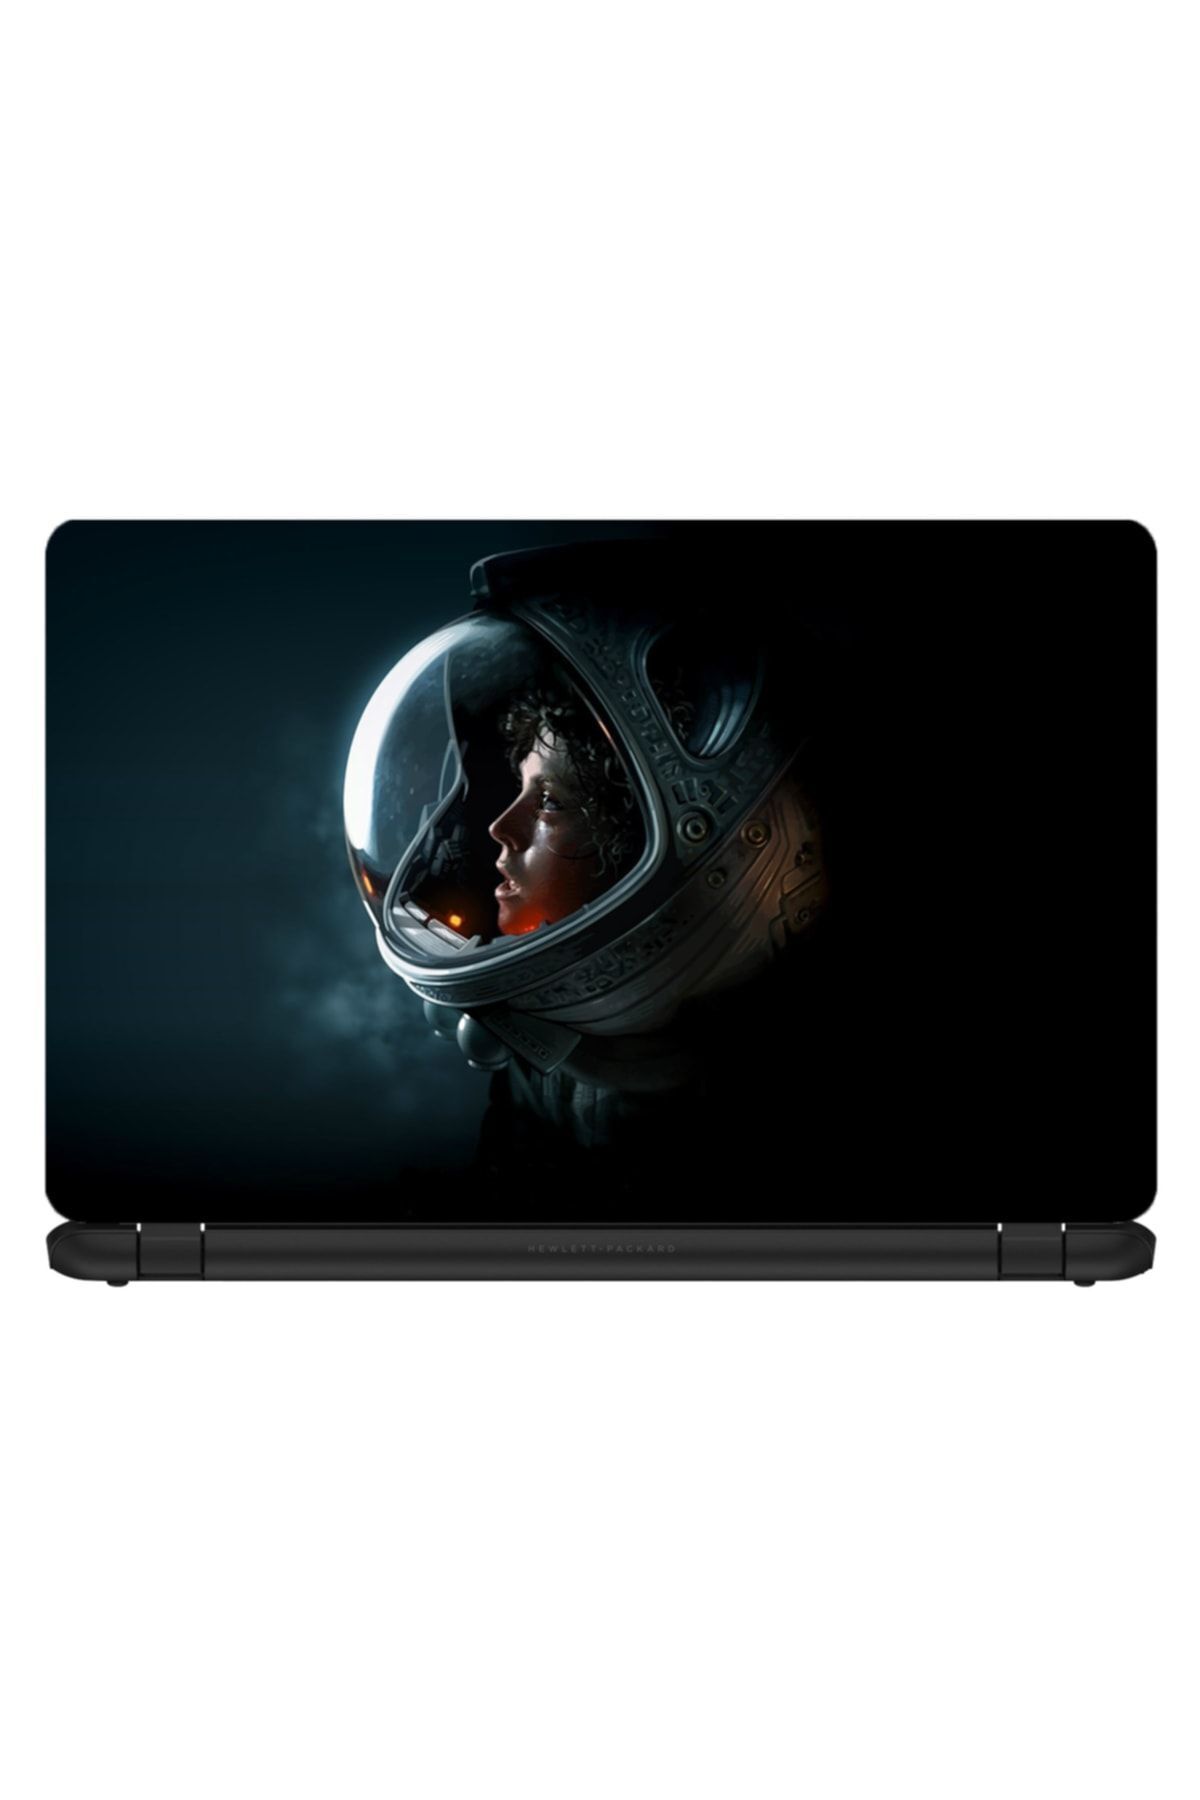 KT Decor Alien Laptop Sticker 15.6 Inch